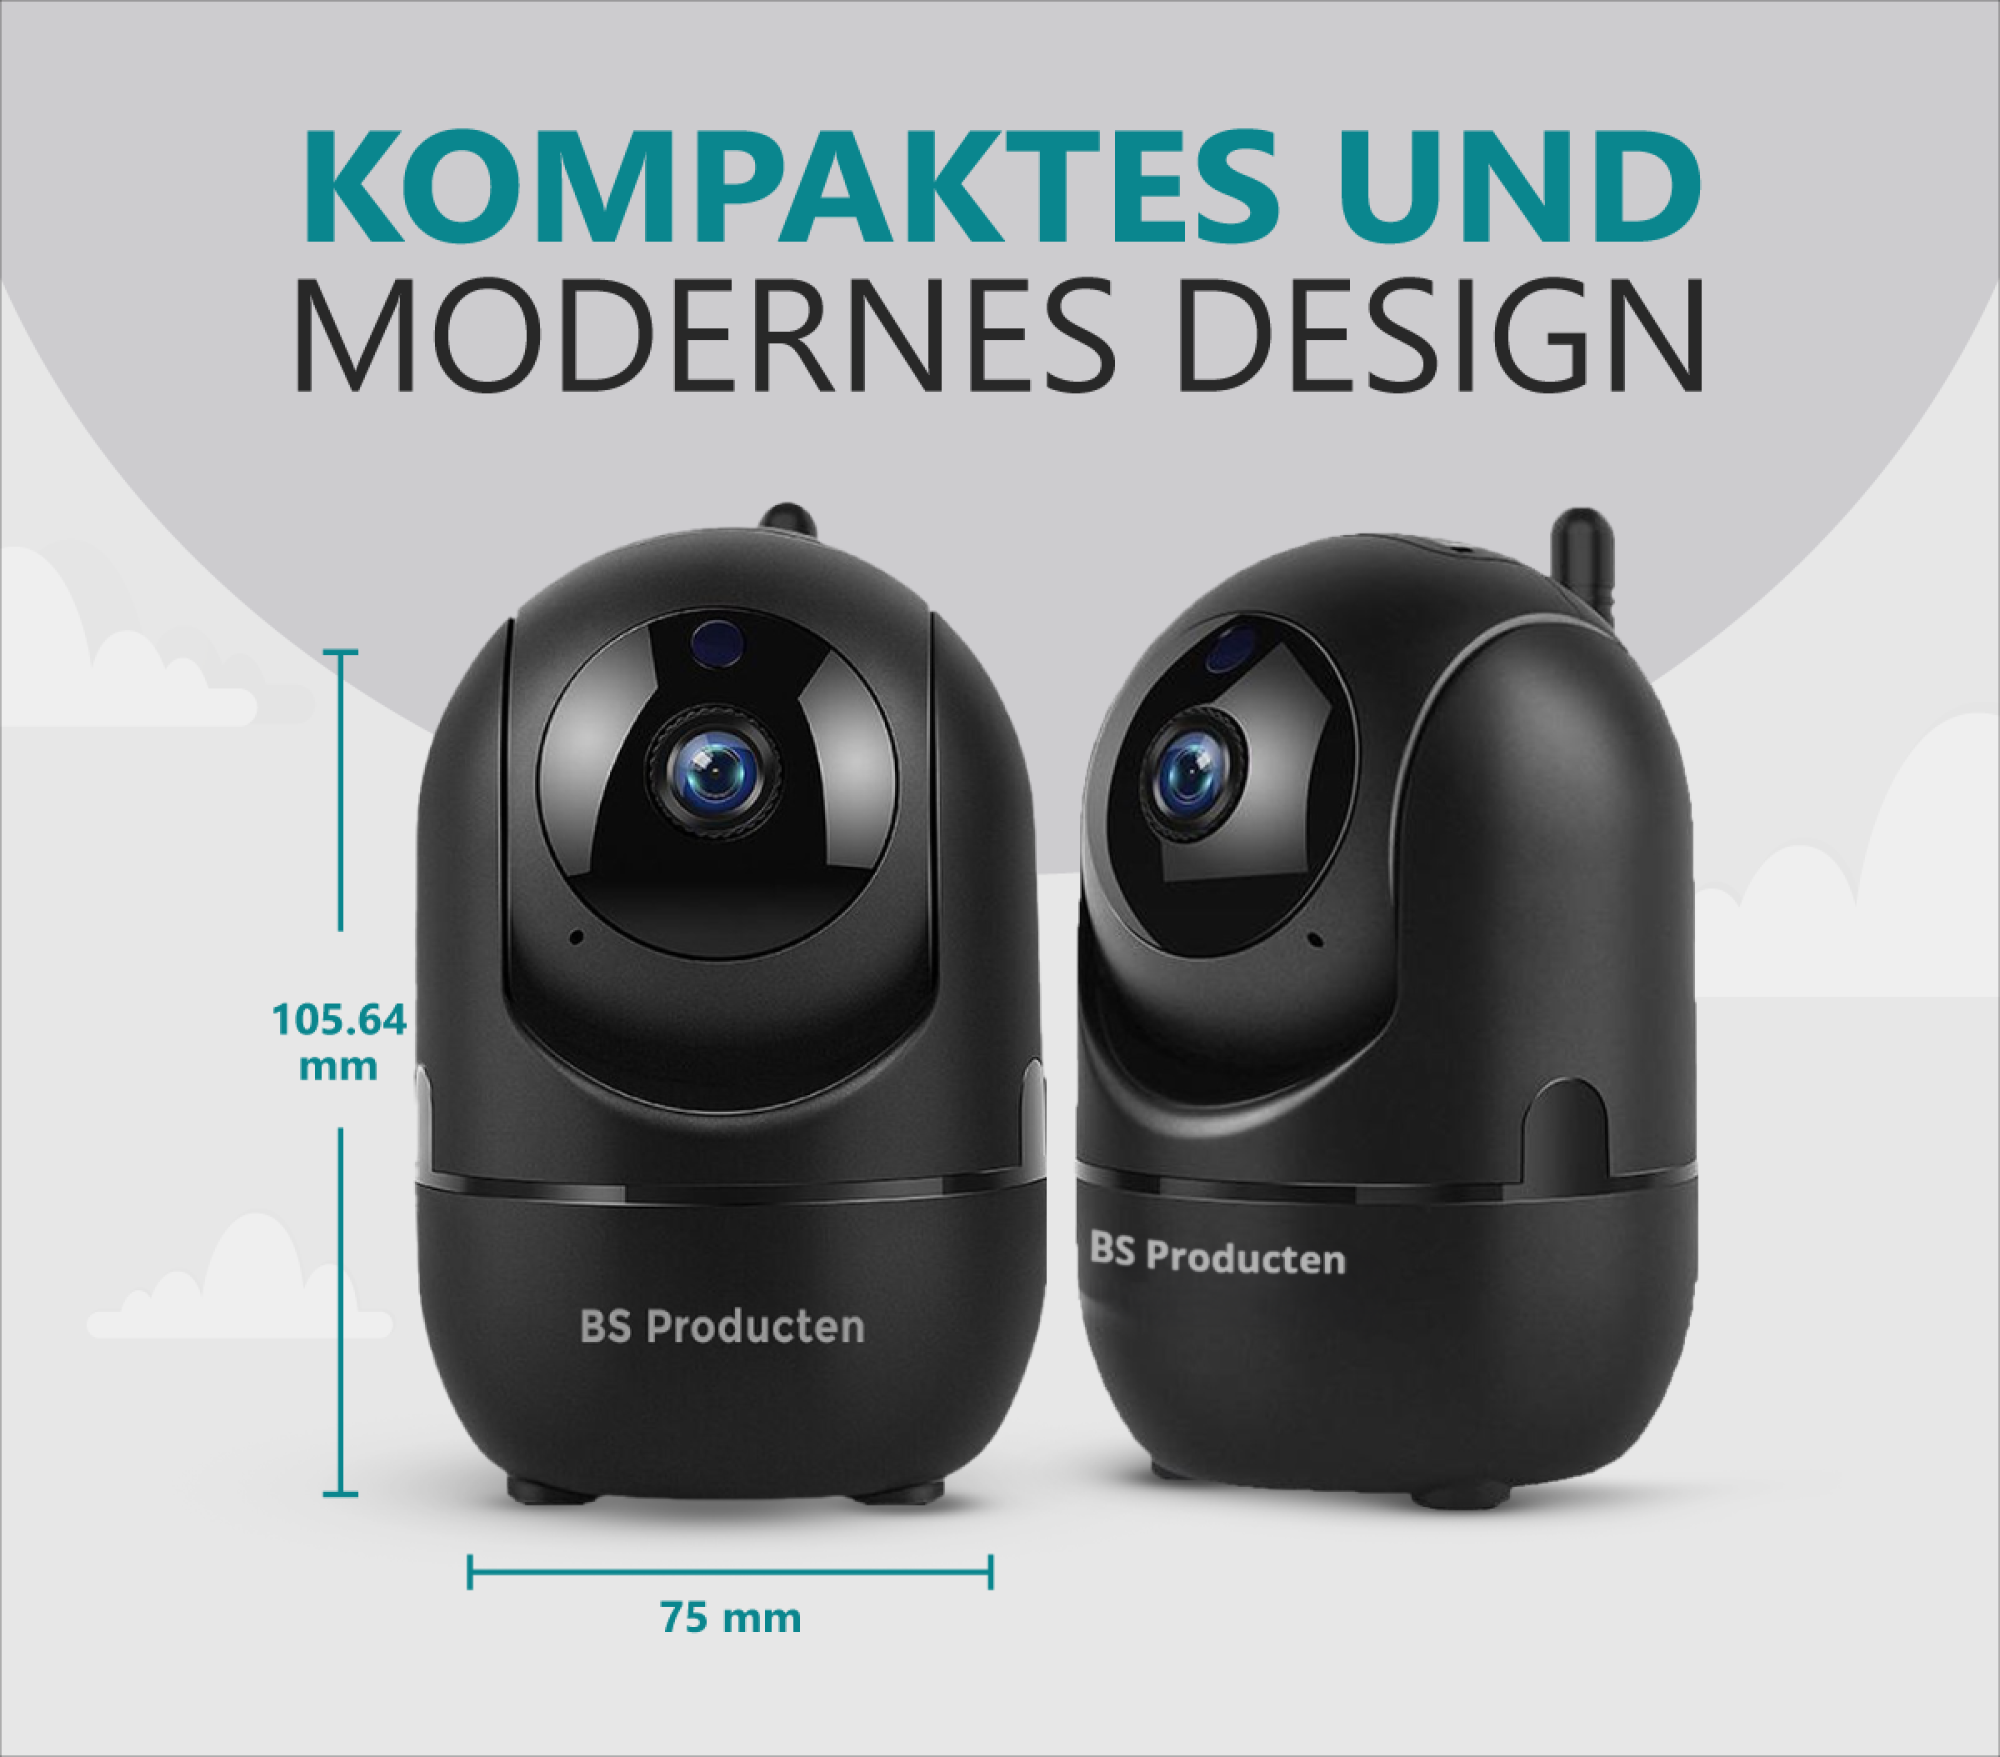 BS PRODUCTEN Babyphone WLAN, camera Schwarz – mit IP Kamera und App